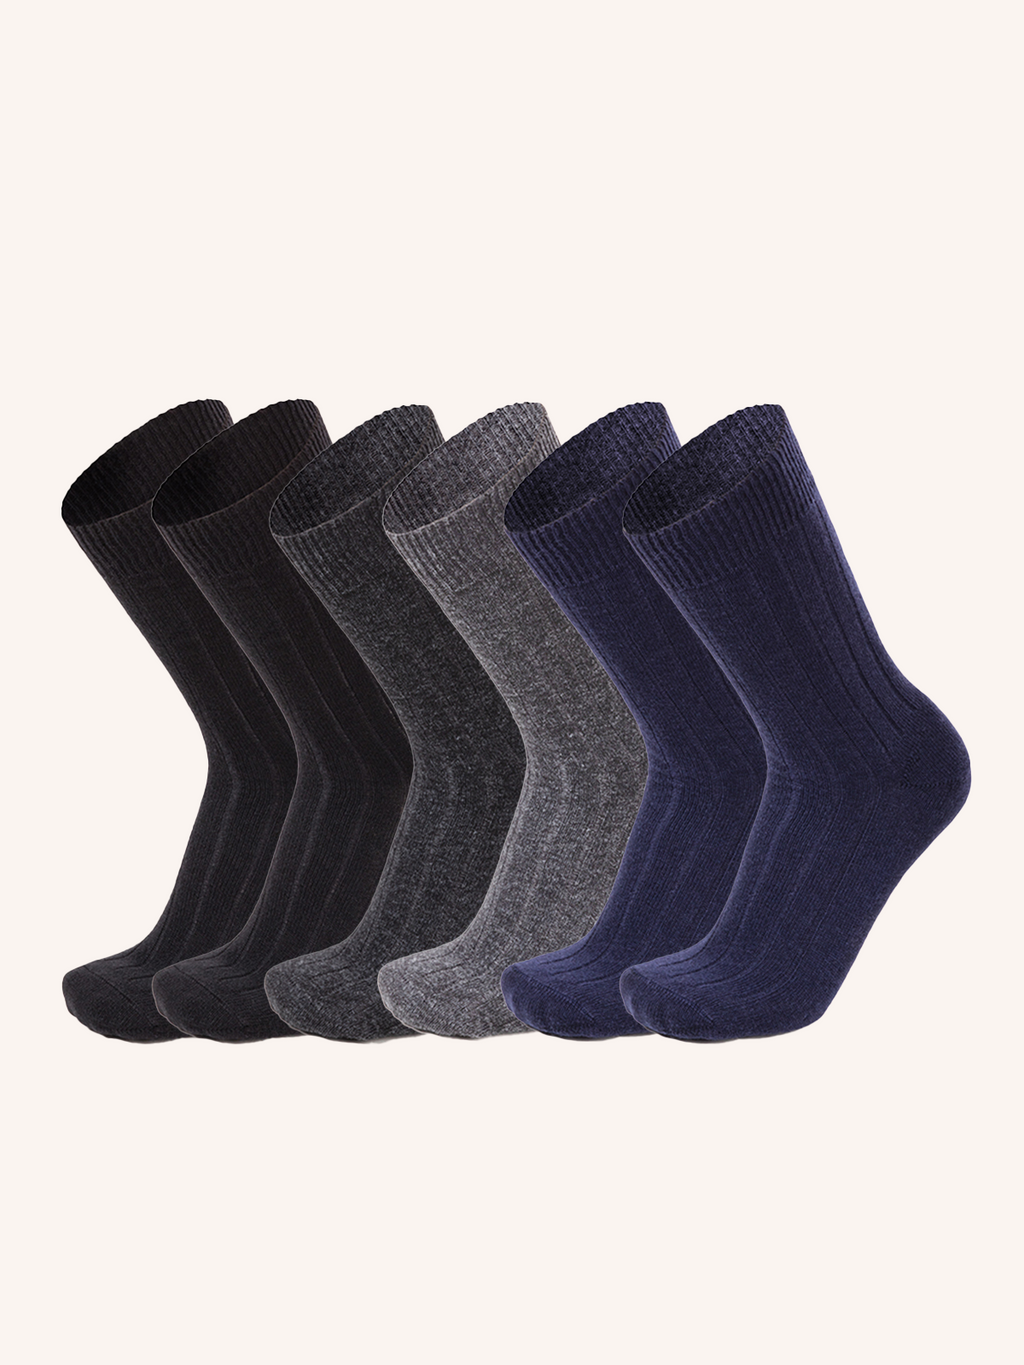 Short Wool Sock for Men, Plain Color, Pack of 6 pairs